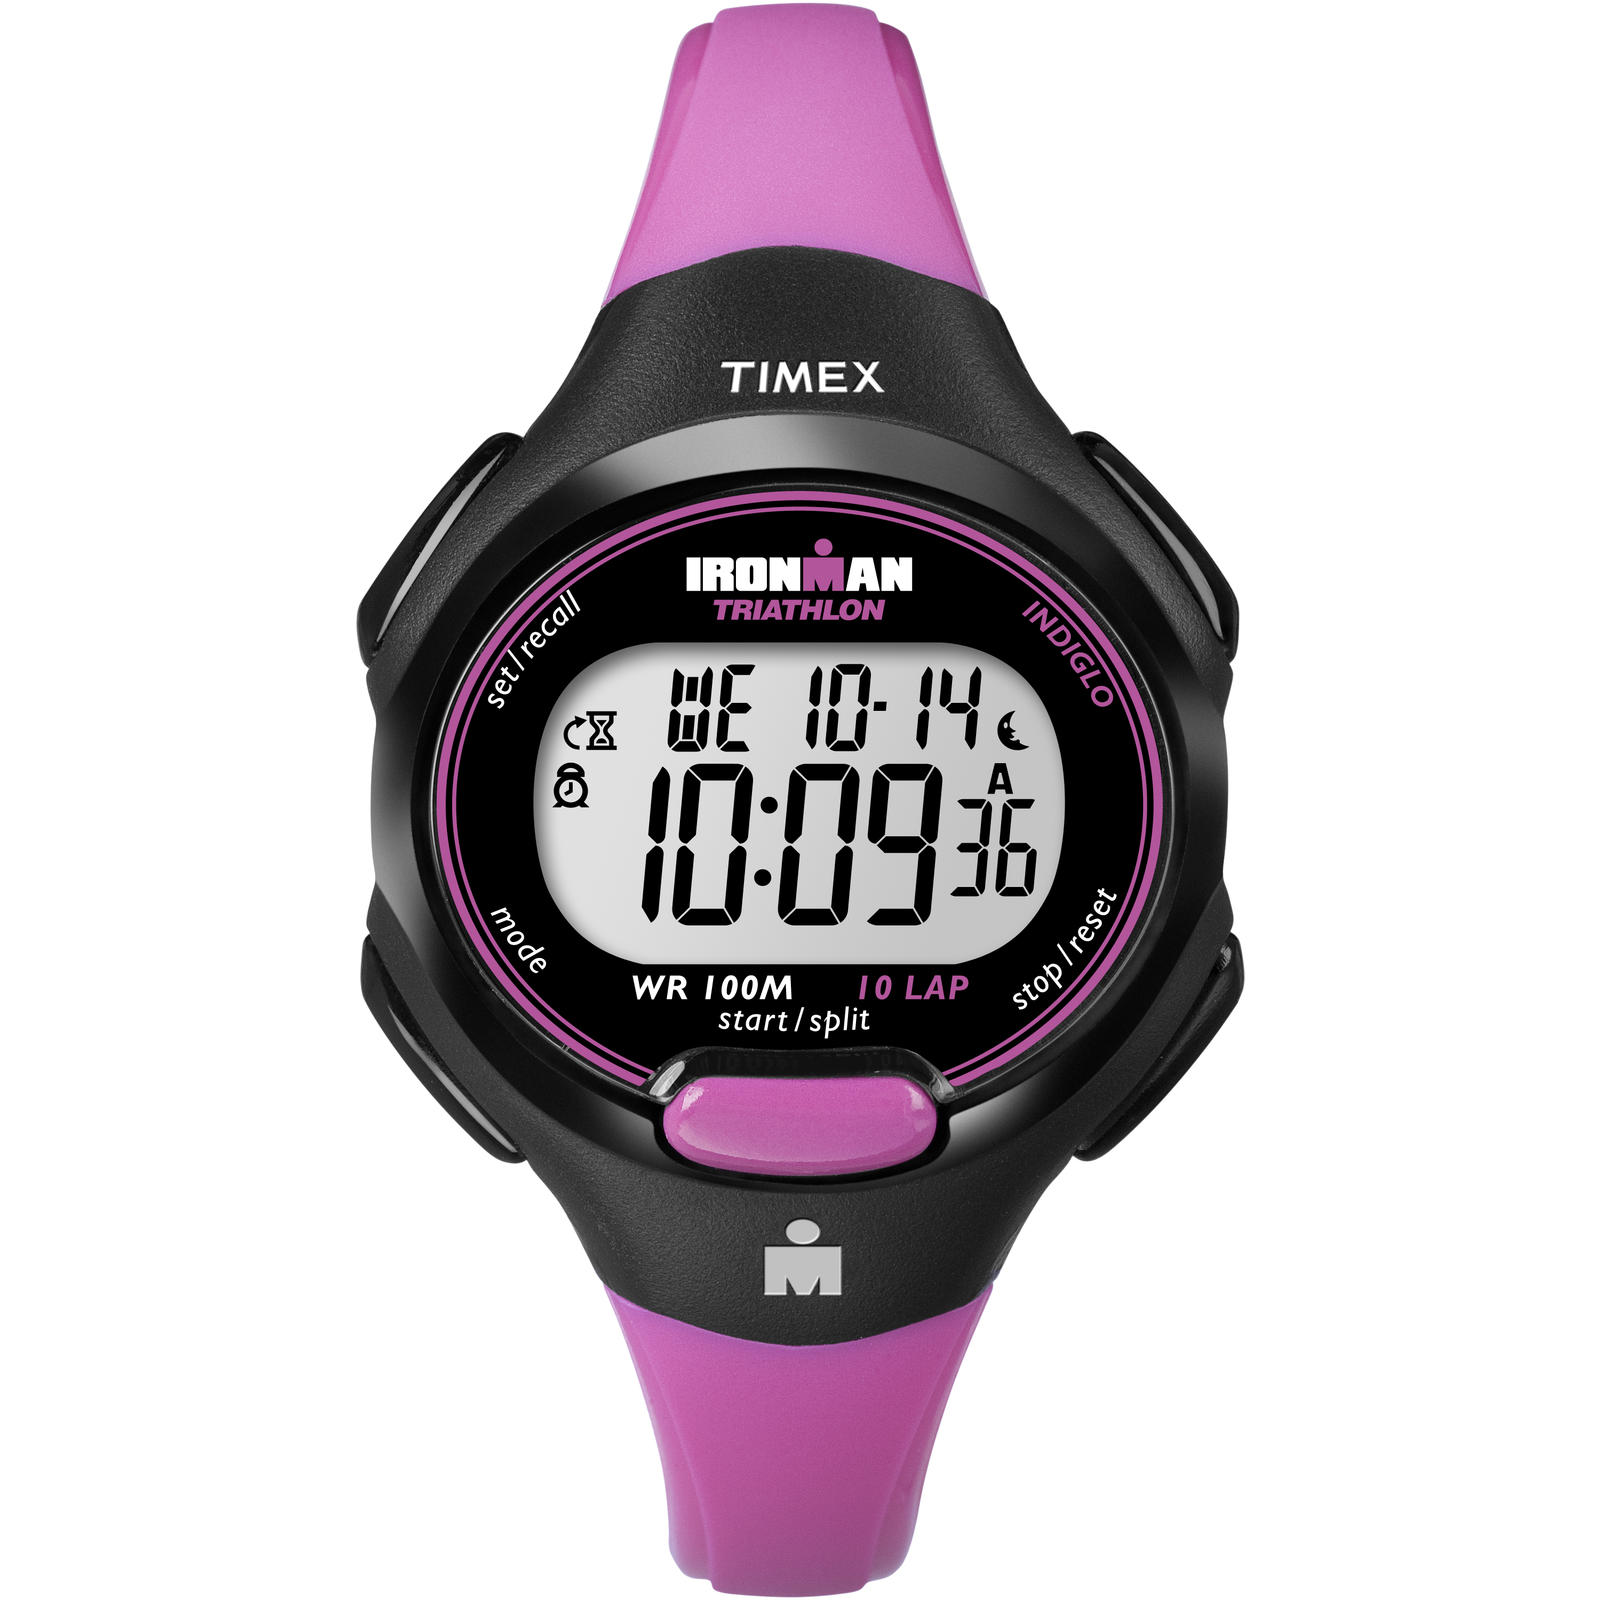 Timex Ironman 10-Lap Watch